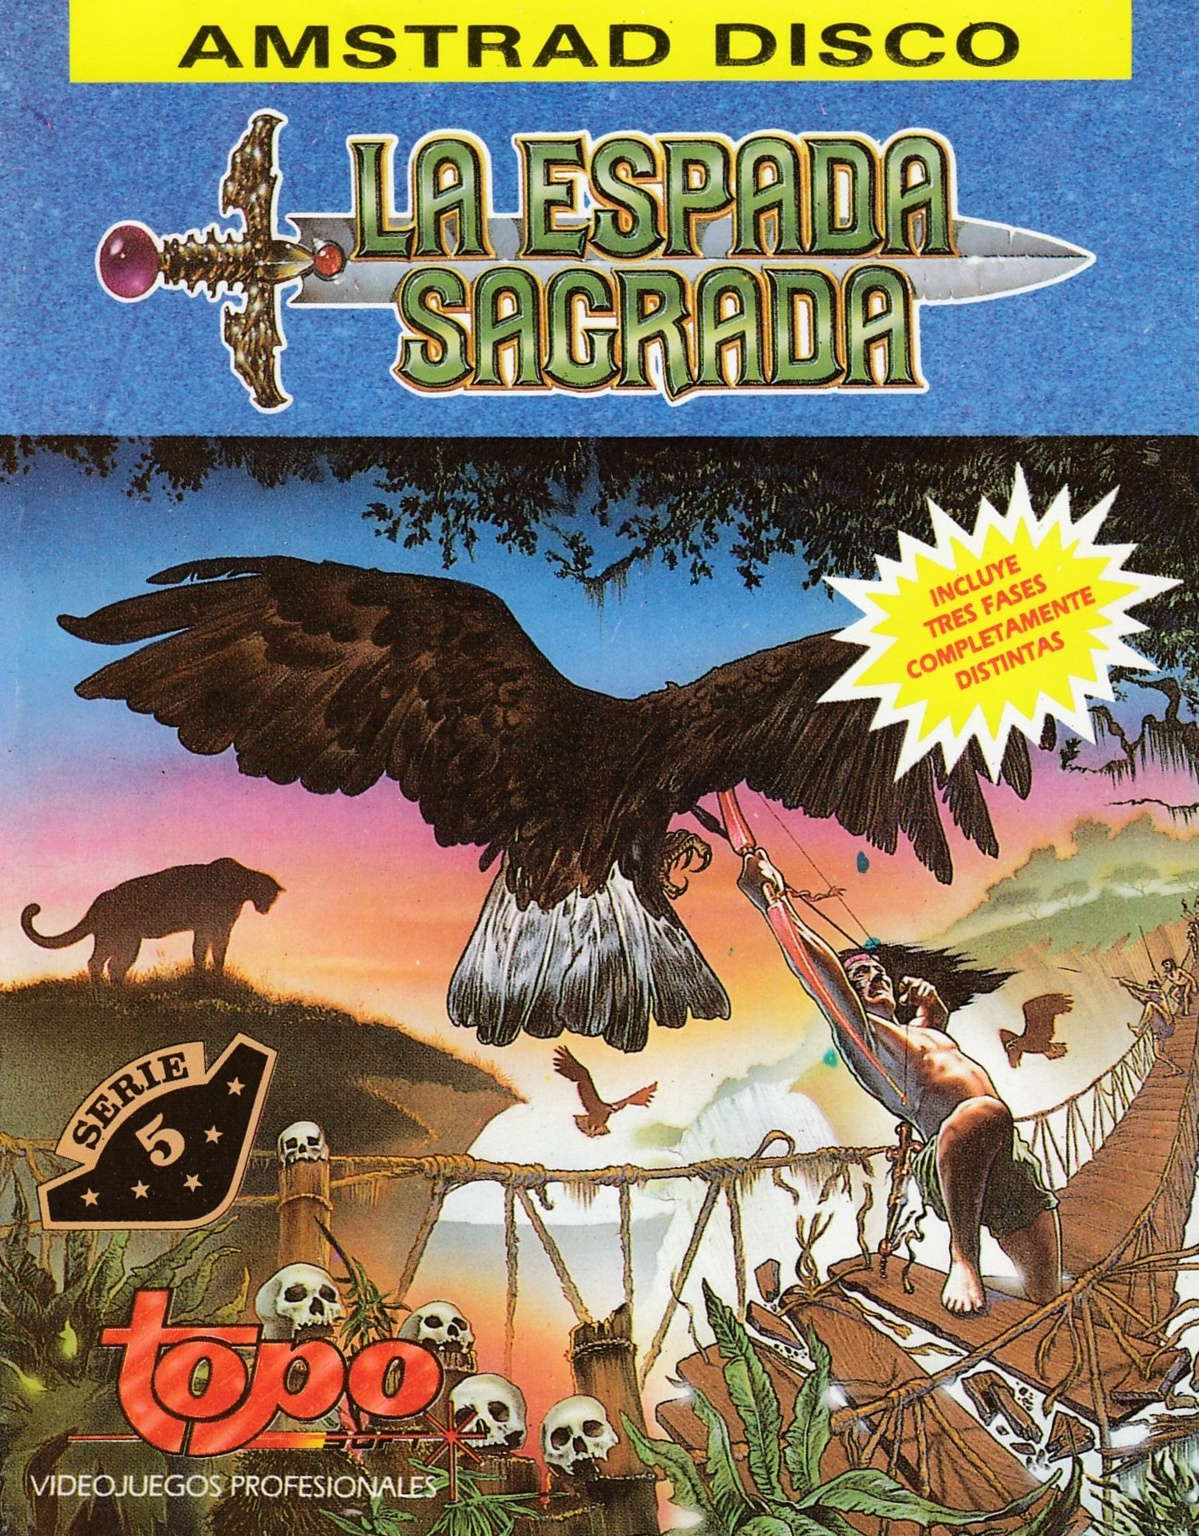 screenshot of the Amstrad CPC game Espada Sagrada (la) by GameBase CPC